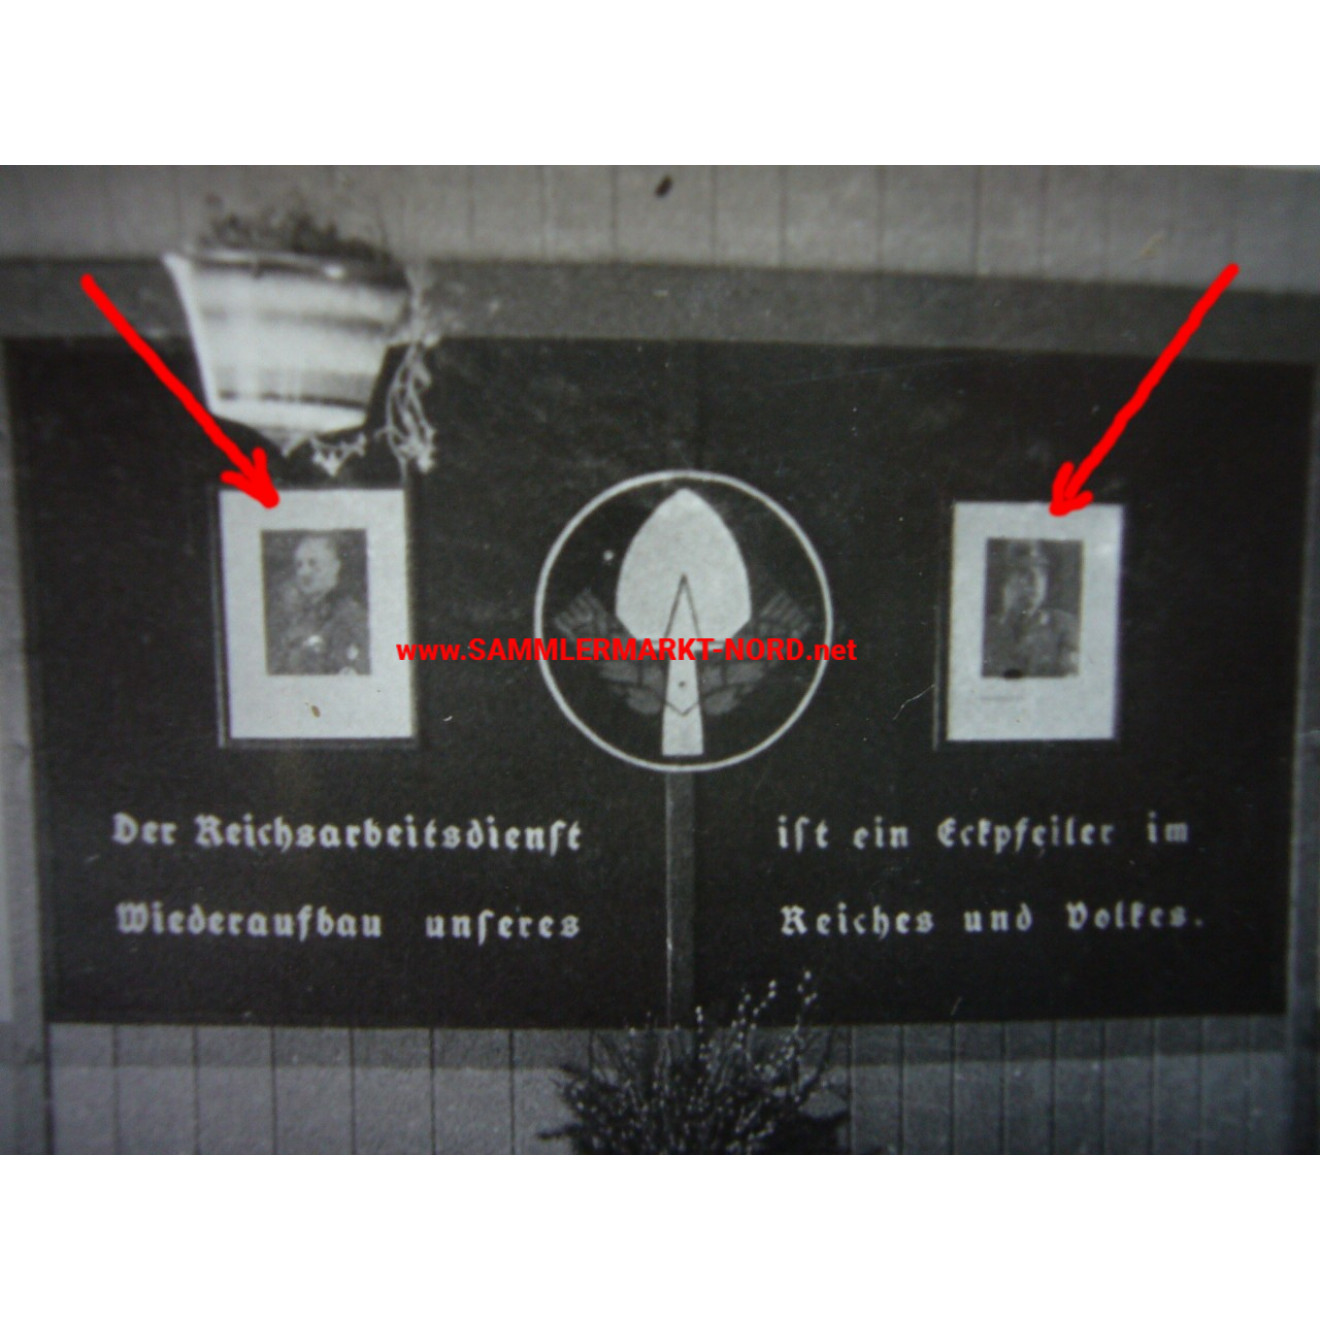 RAD Reich Labour Service - Wall Decoration with Portraits